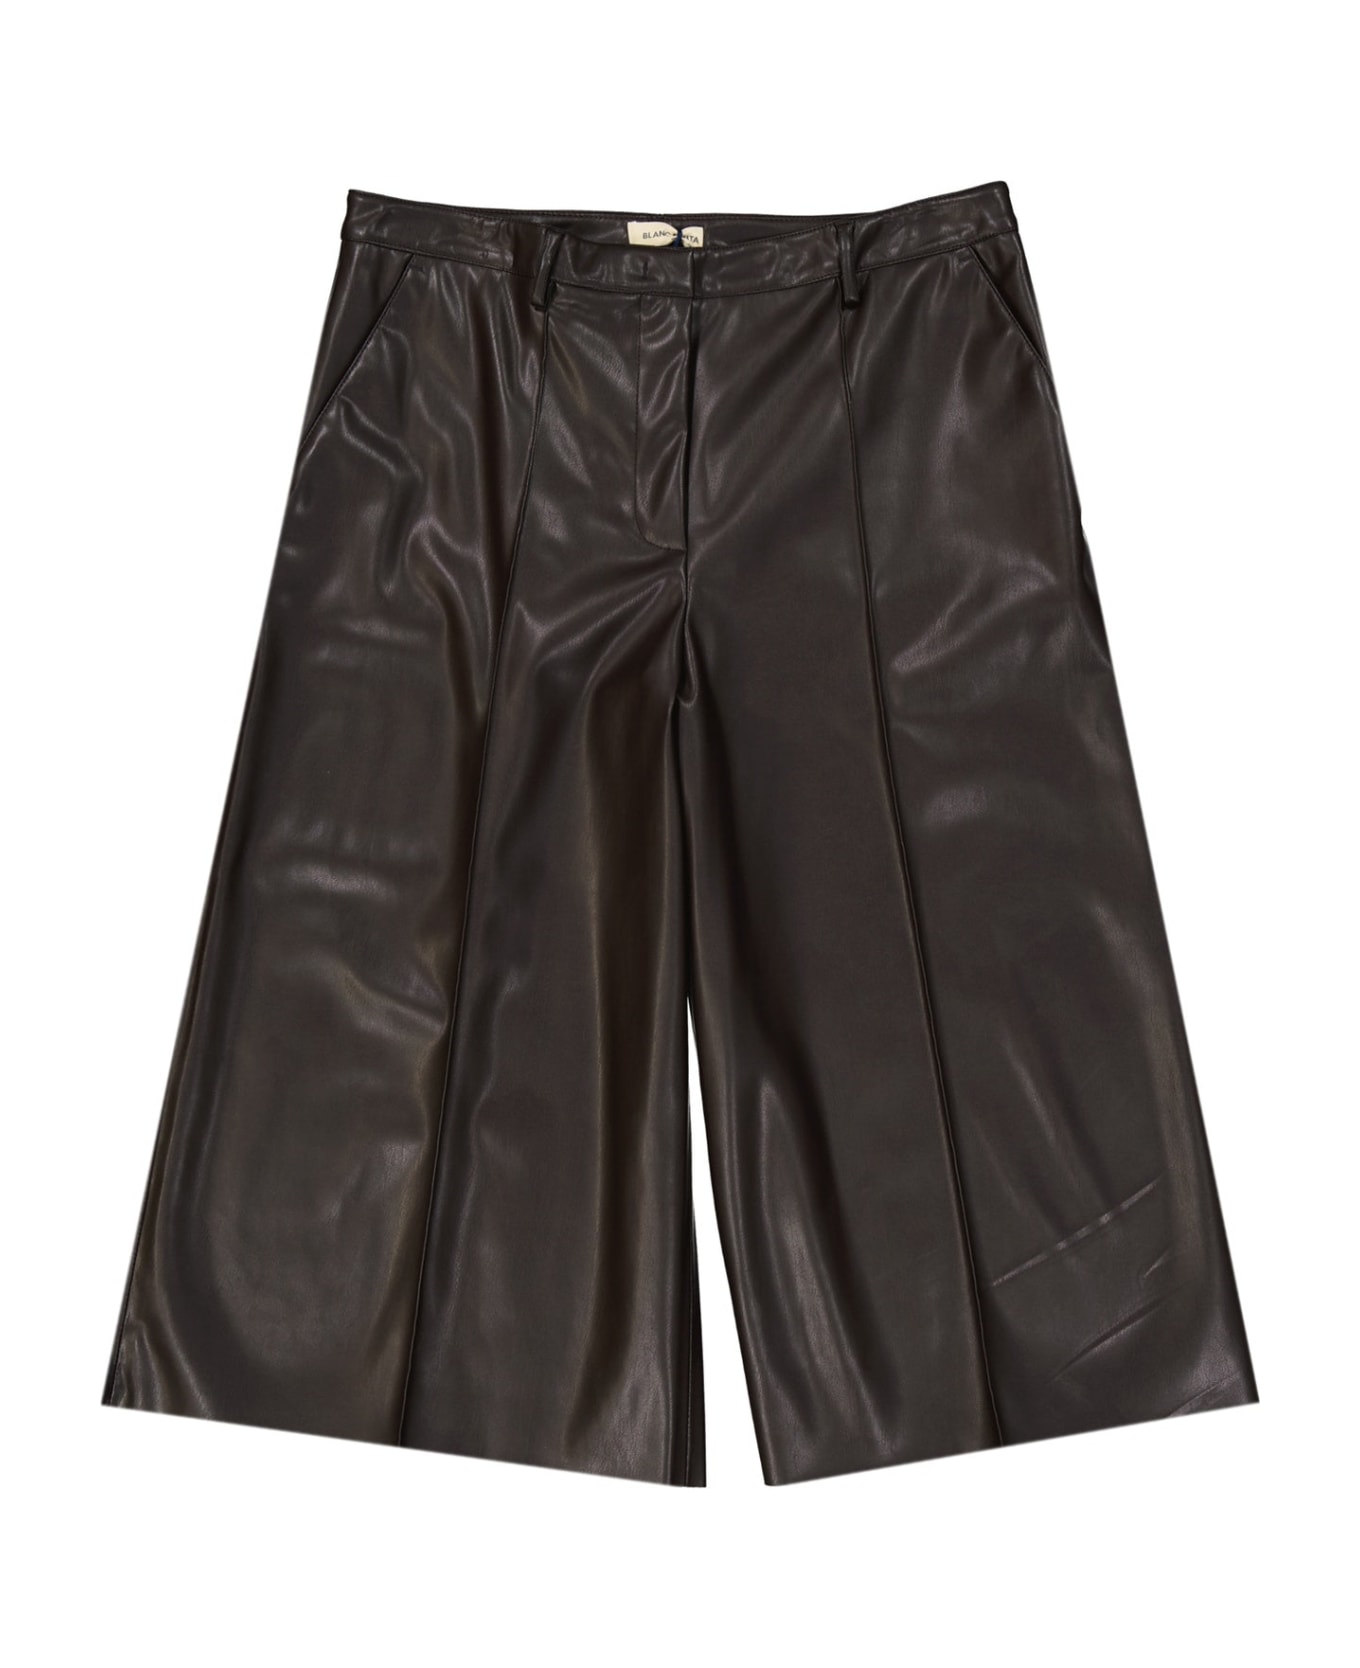 Blanca Vita Faux Leather Shorts - Brown